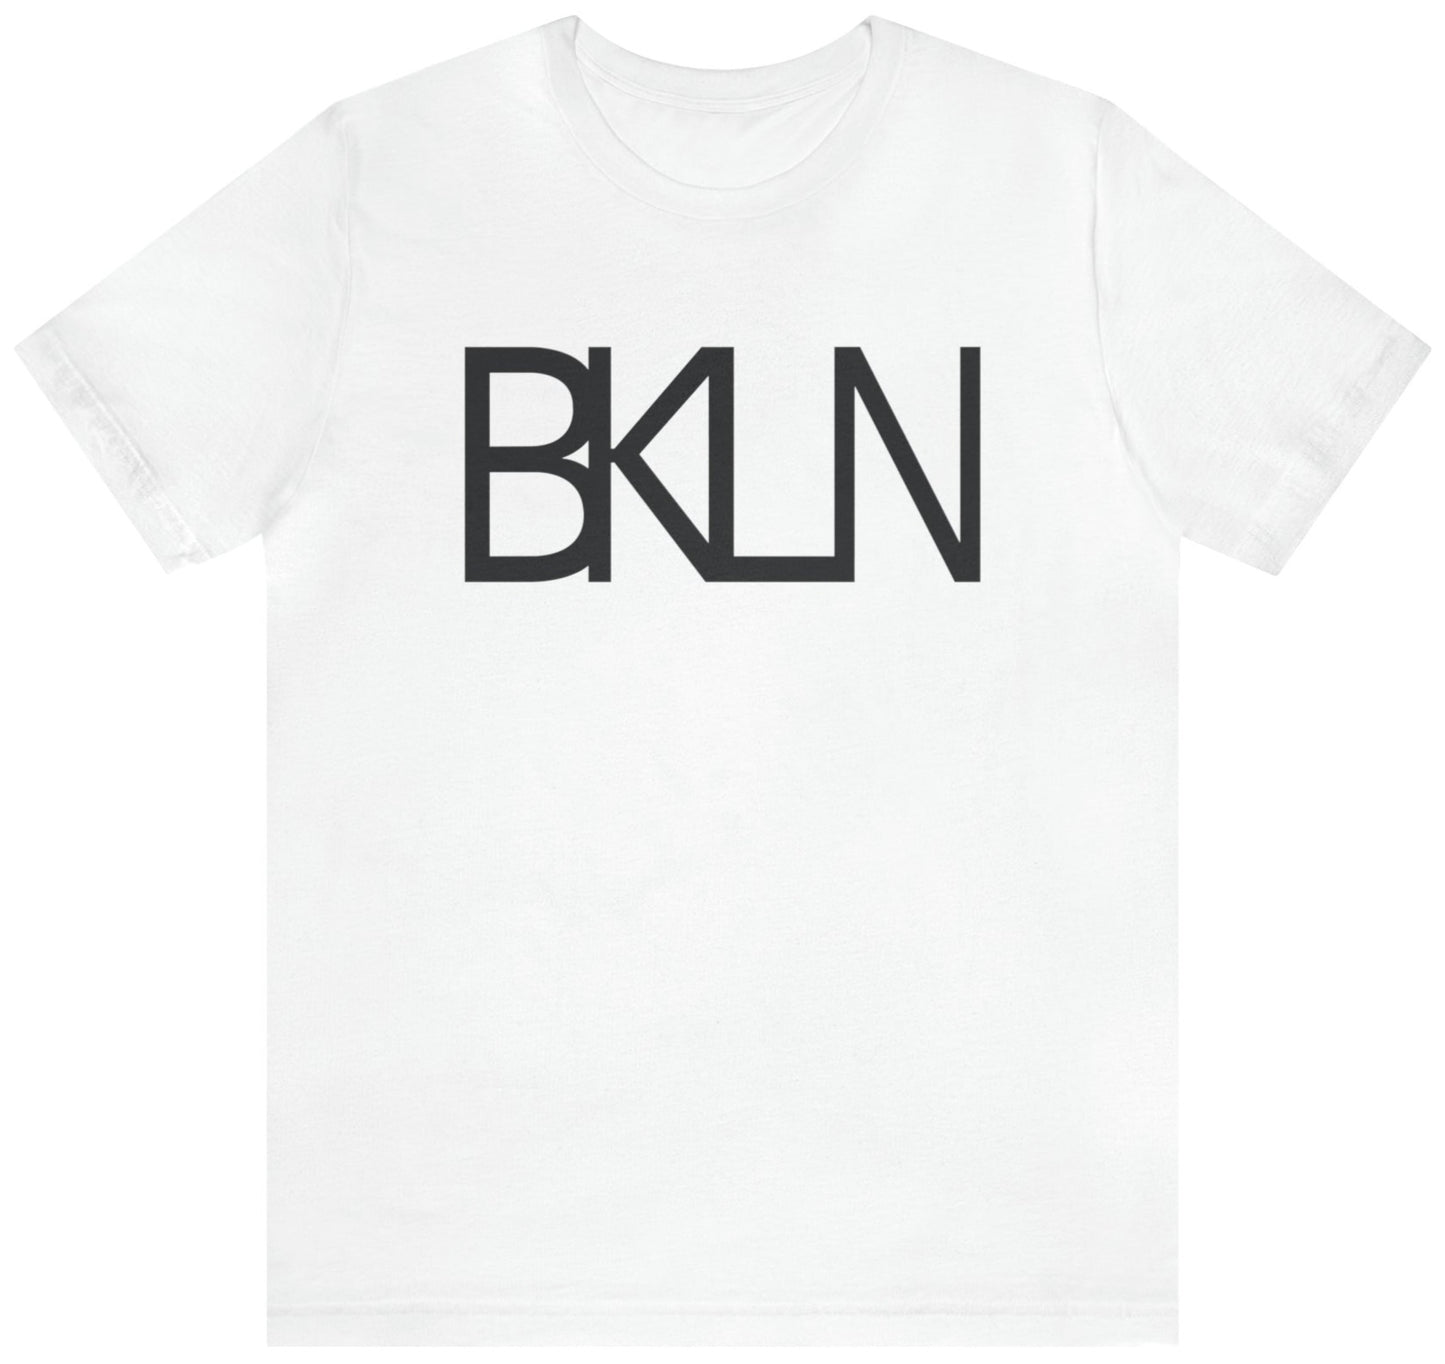 BKLN - Unisex T-Shirt